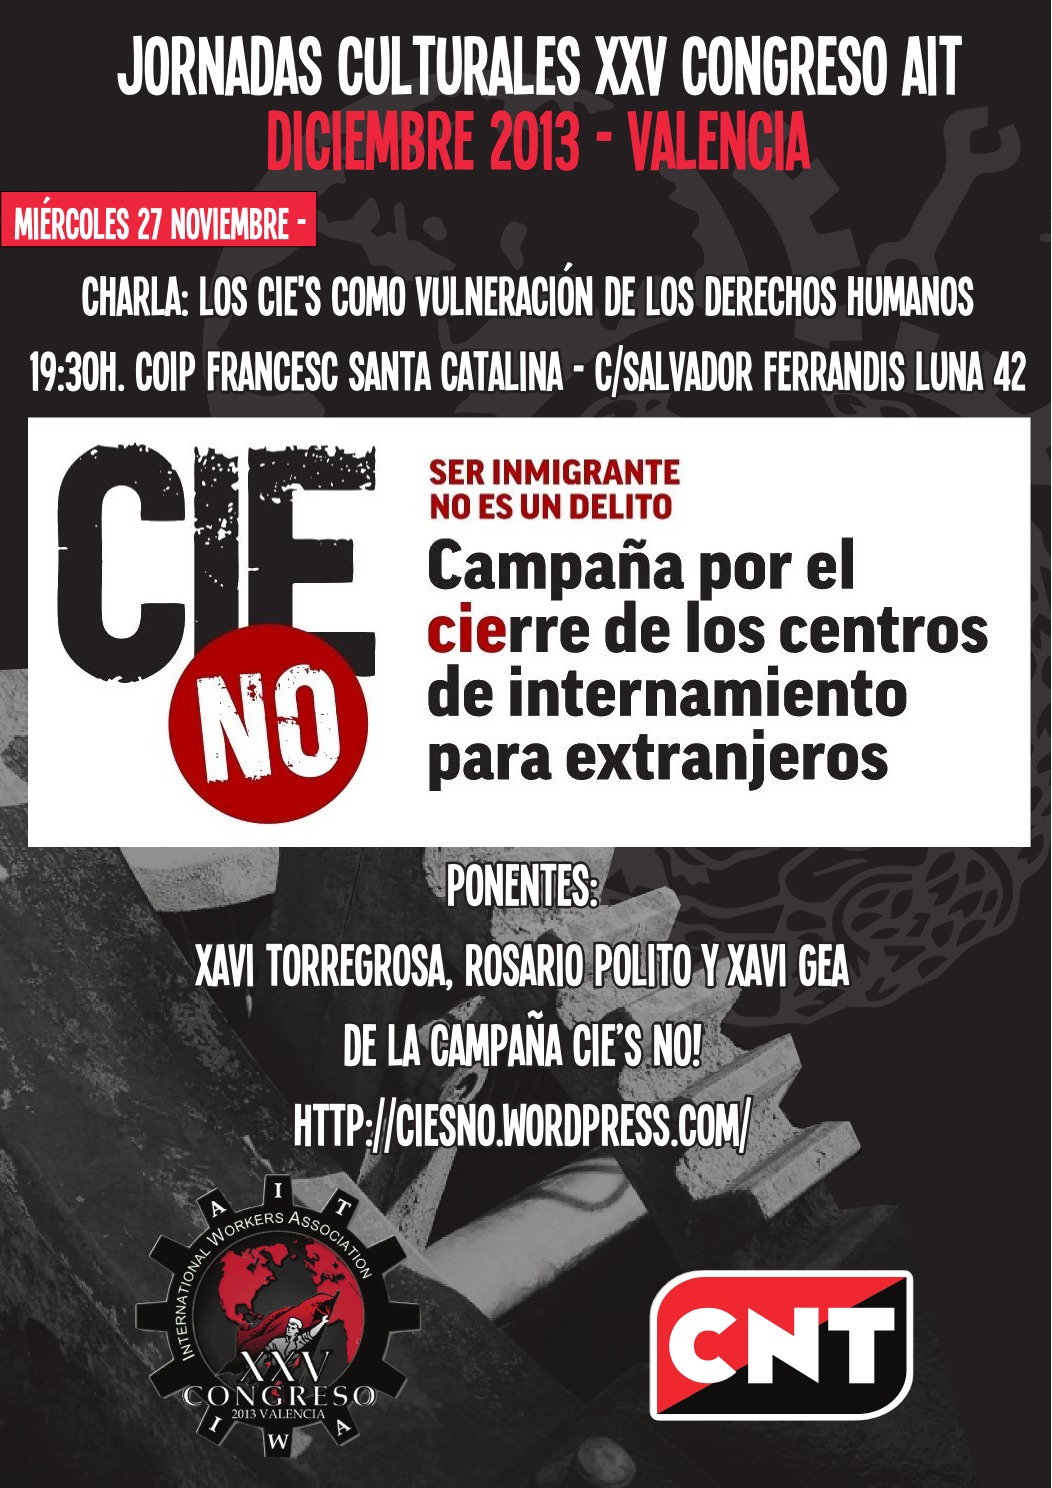 http://valencia.cnt.es/wp-content/uploads/2013/11/CIE2.jpg